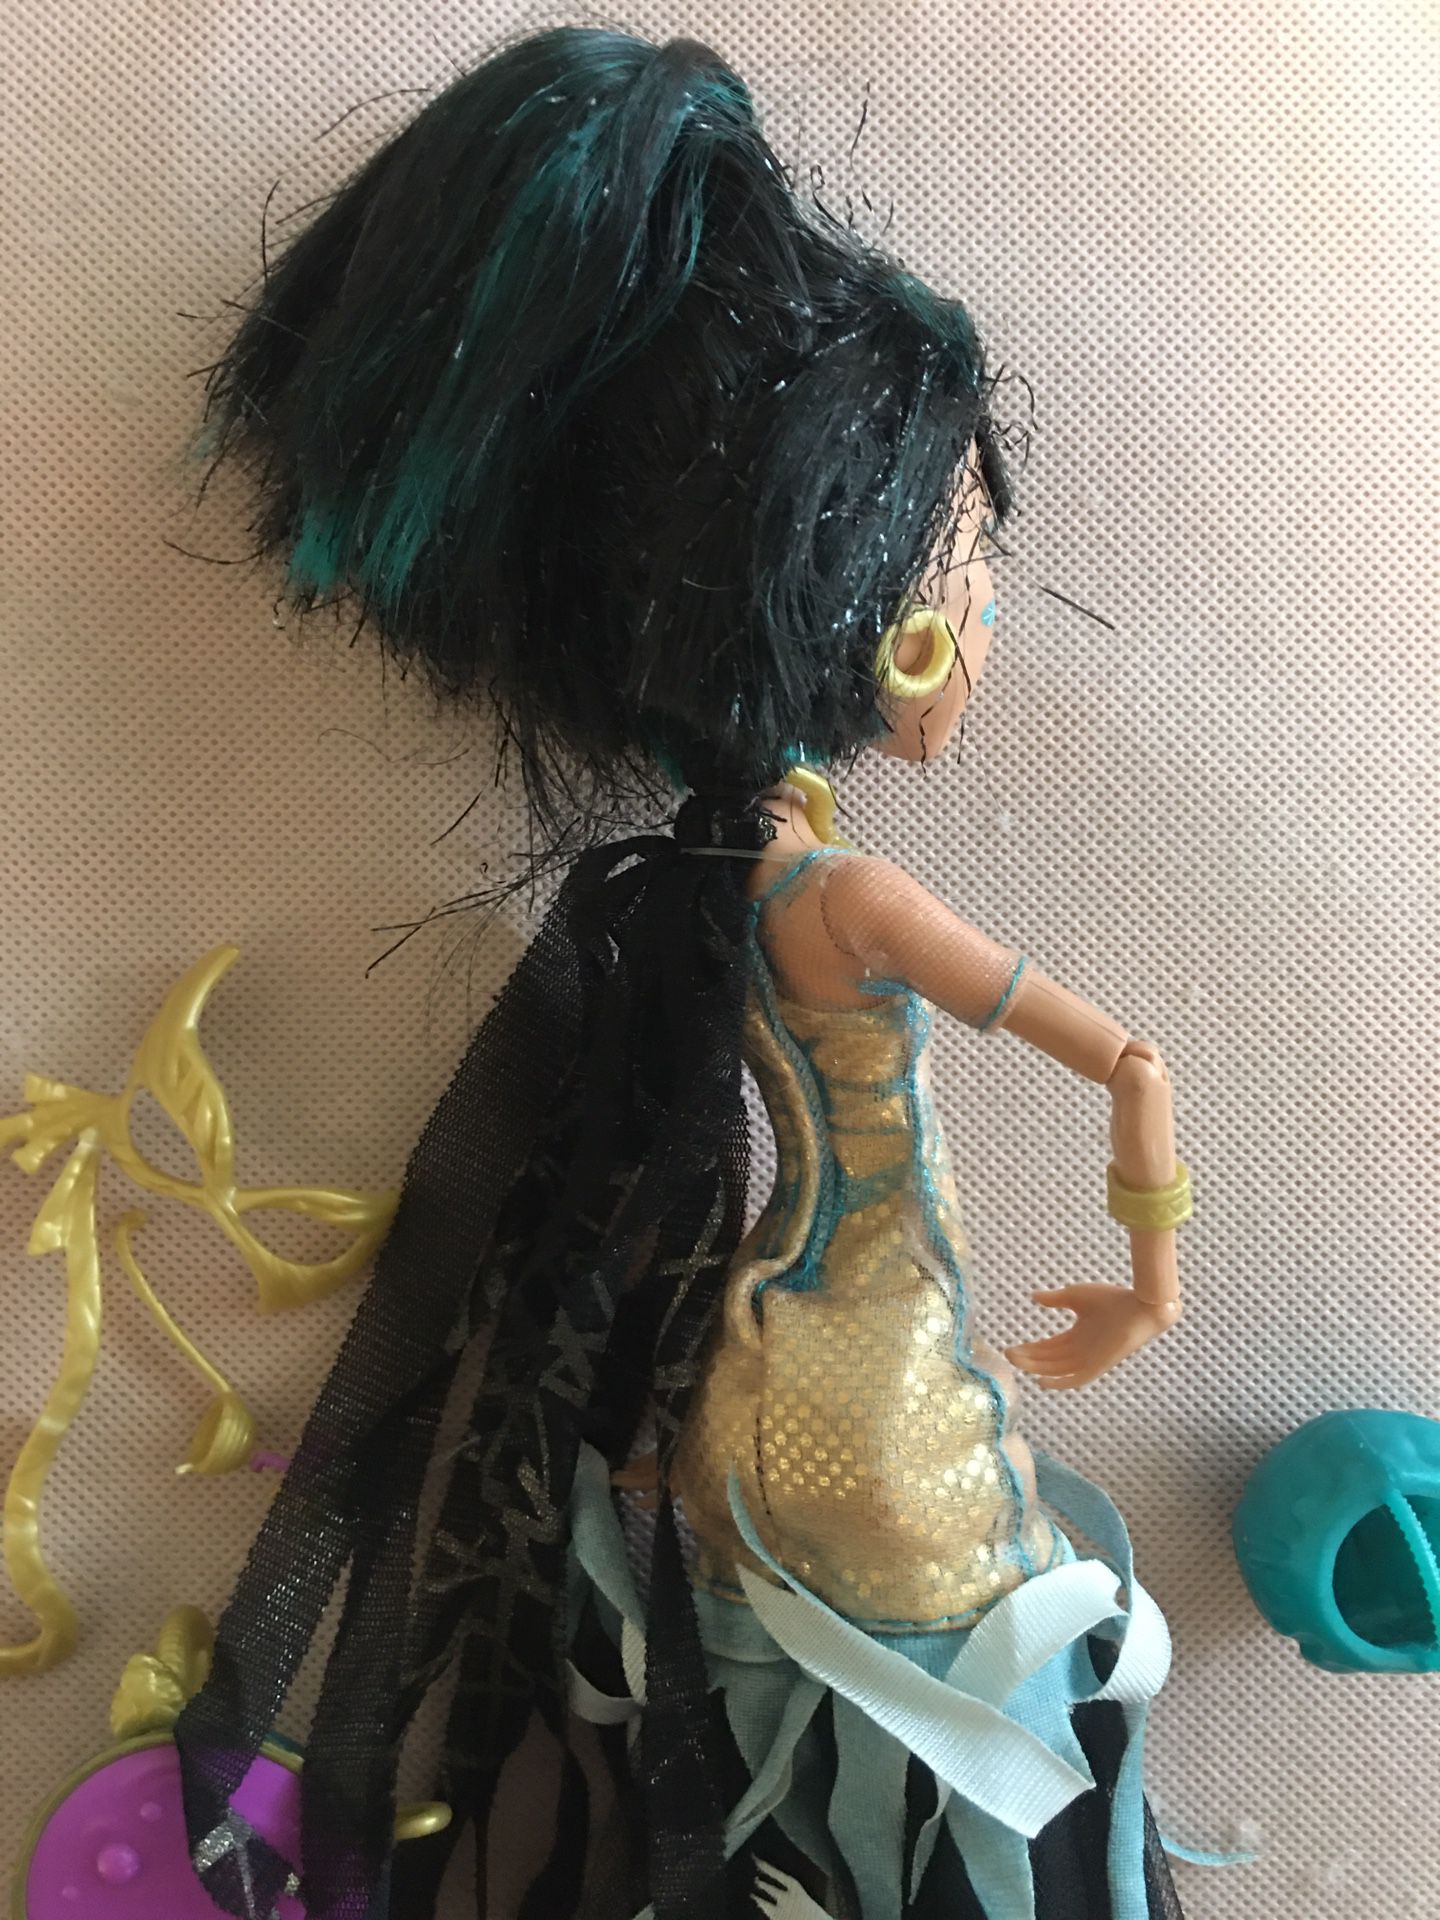 Monster High Ghouls Rule Cleo De Nile Doll